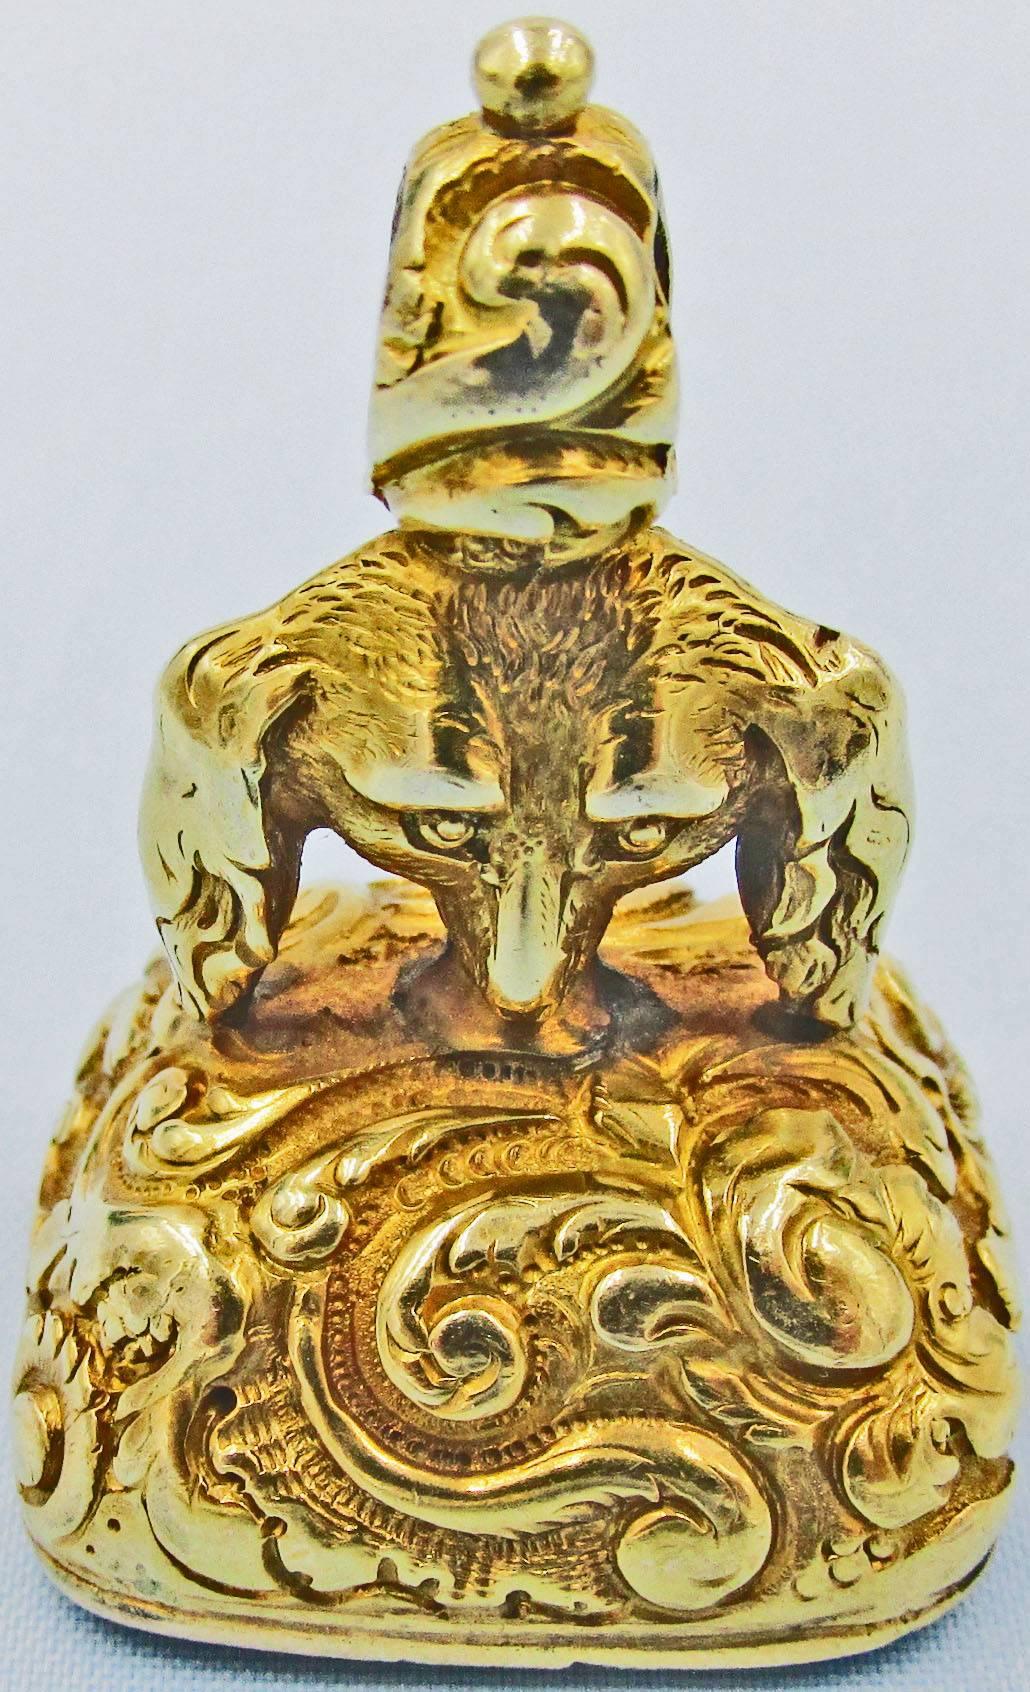 Women's or Men's Antique Gold Dog's Head Fob